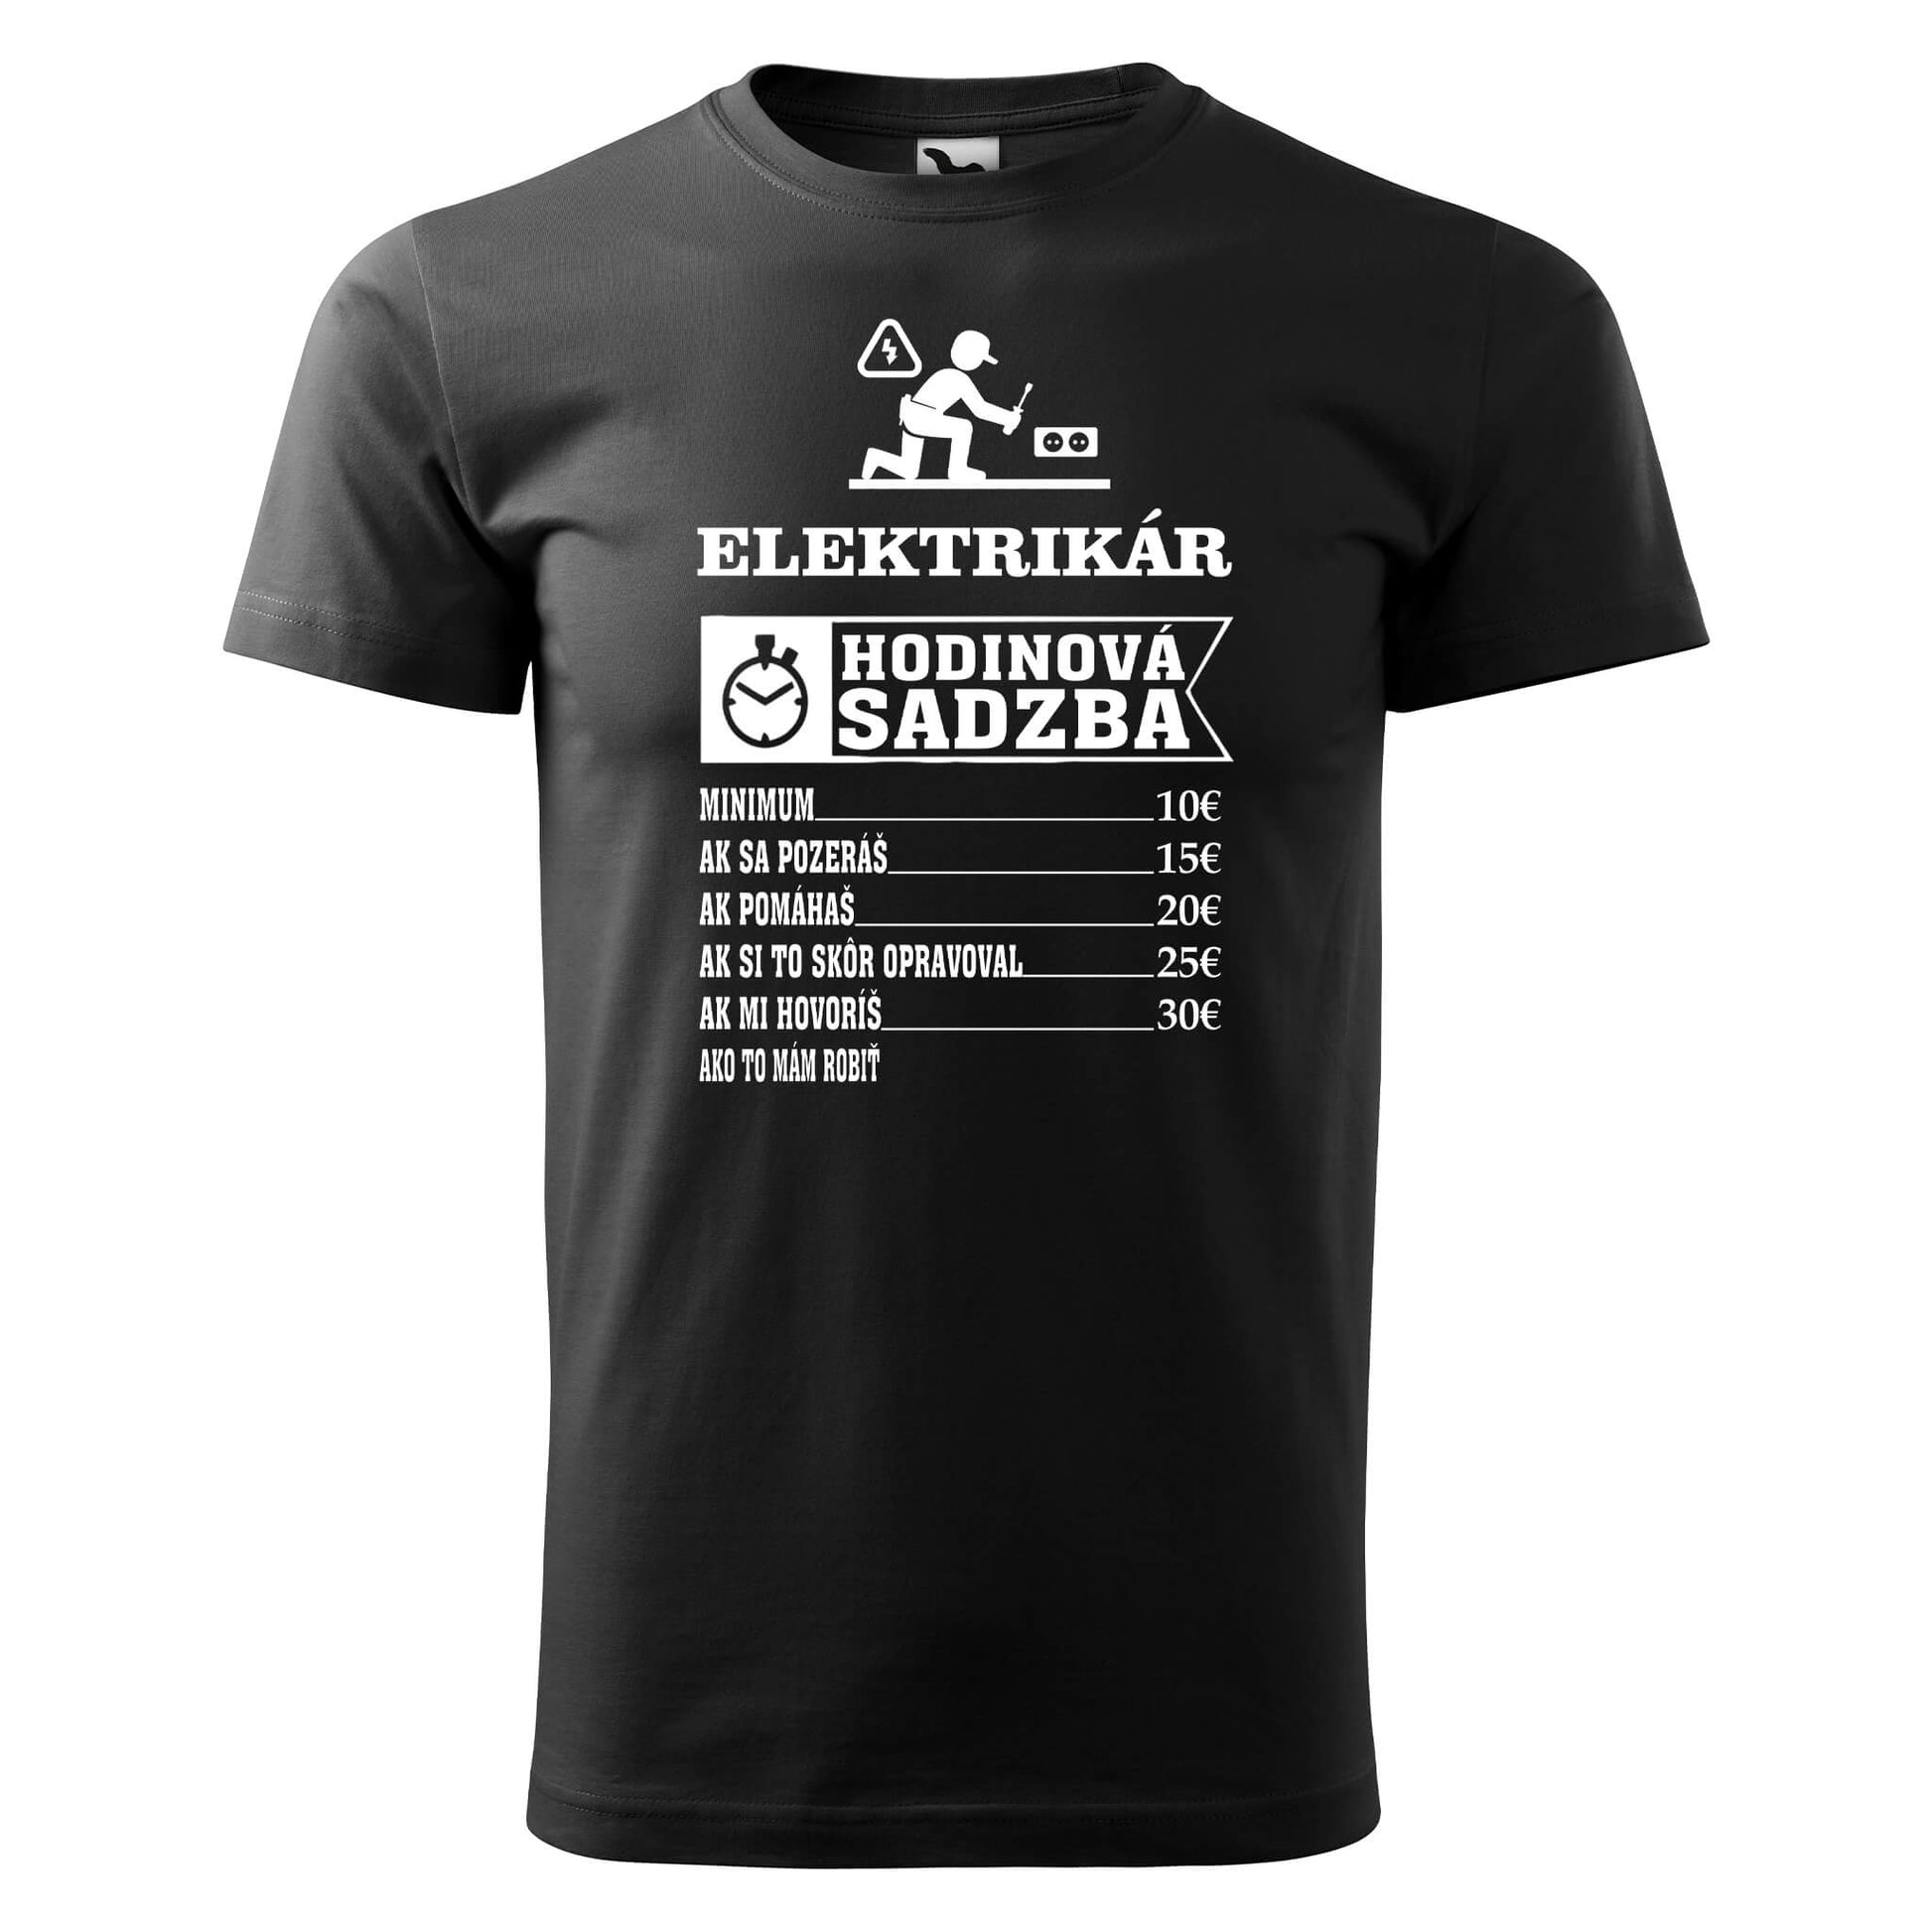 T-shirt - Elektrikár hodinová sadzba - rvdesignprint